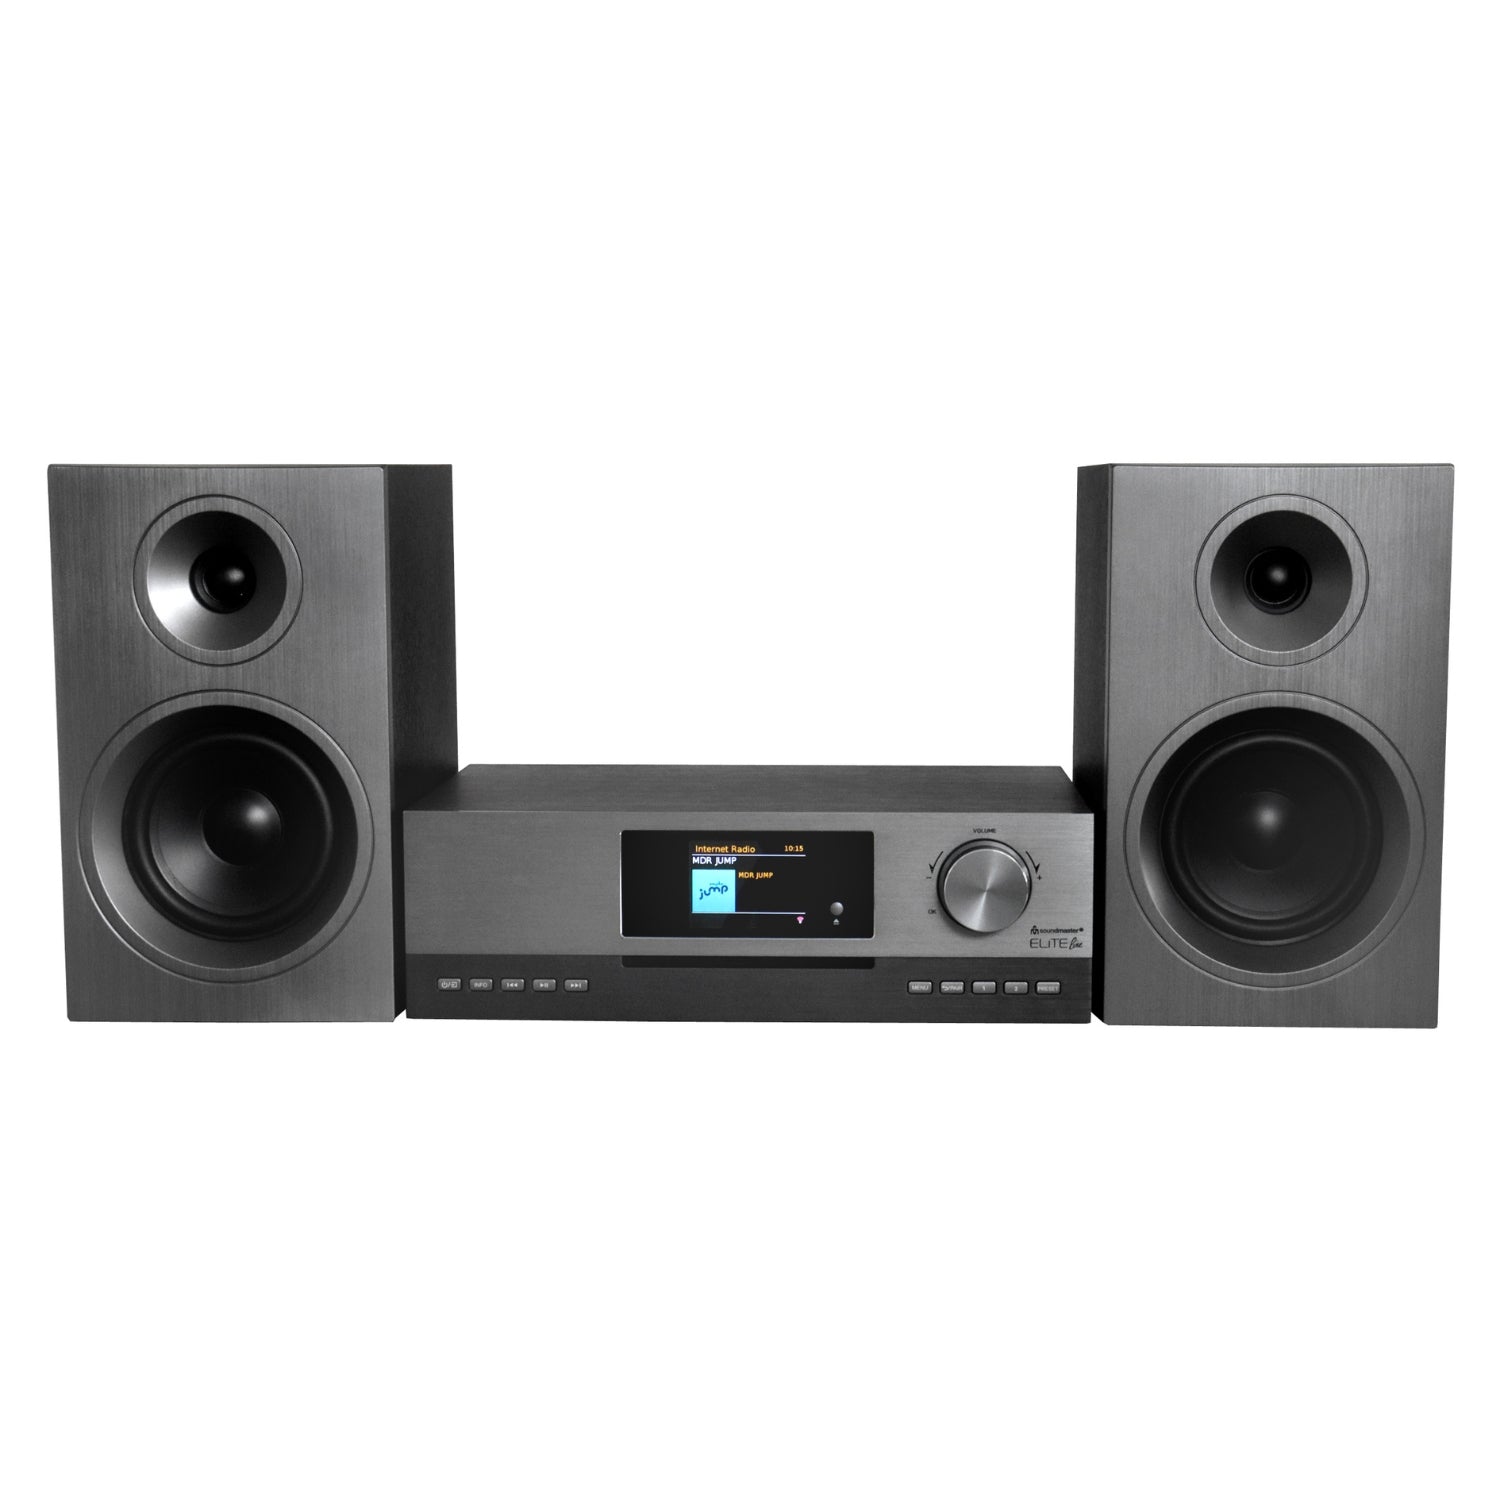 Soundmaster EliteLine ICD5000SW HiFi stereo system Internet radio compact system WLAN DAB+ FM radio CD player USB MP3 app control Spotify